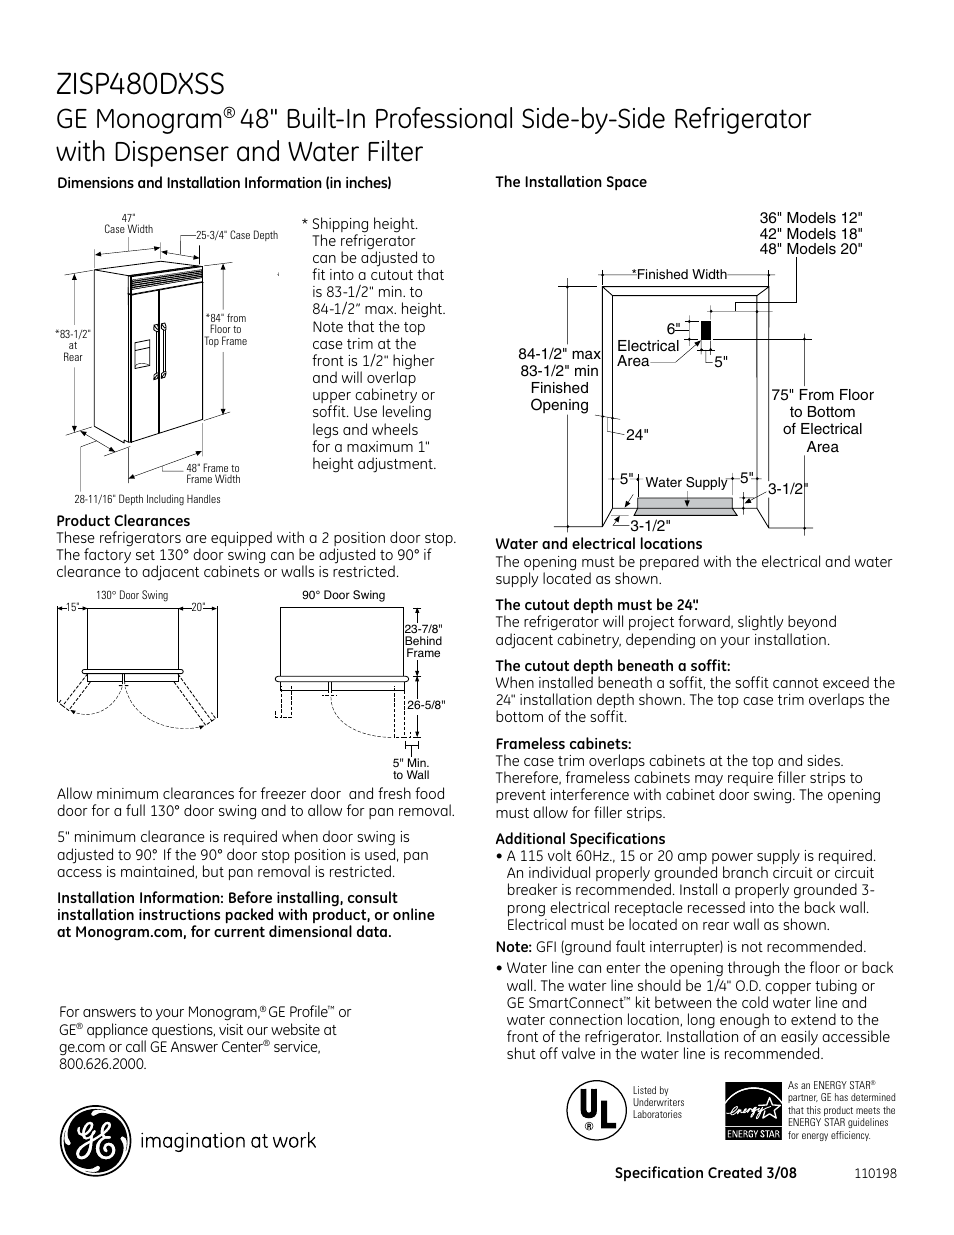 GE MONOGRAM ZISP480DXSS User Manual | 2 pages